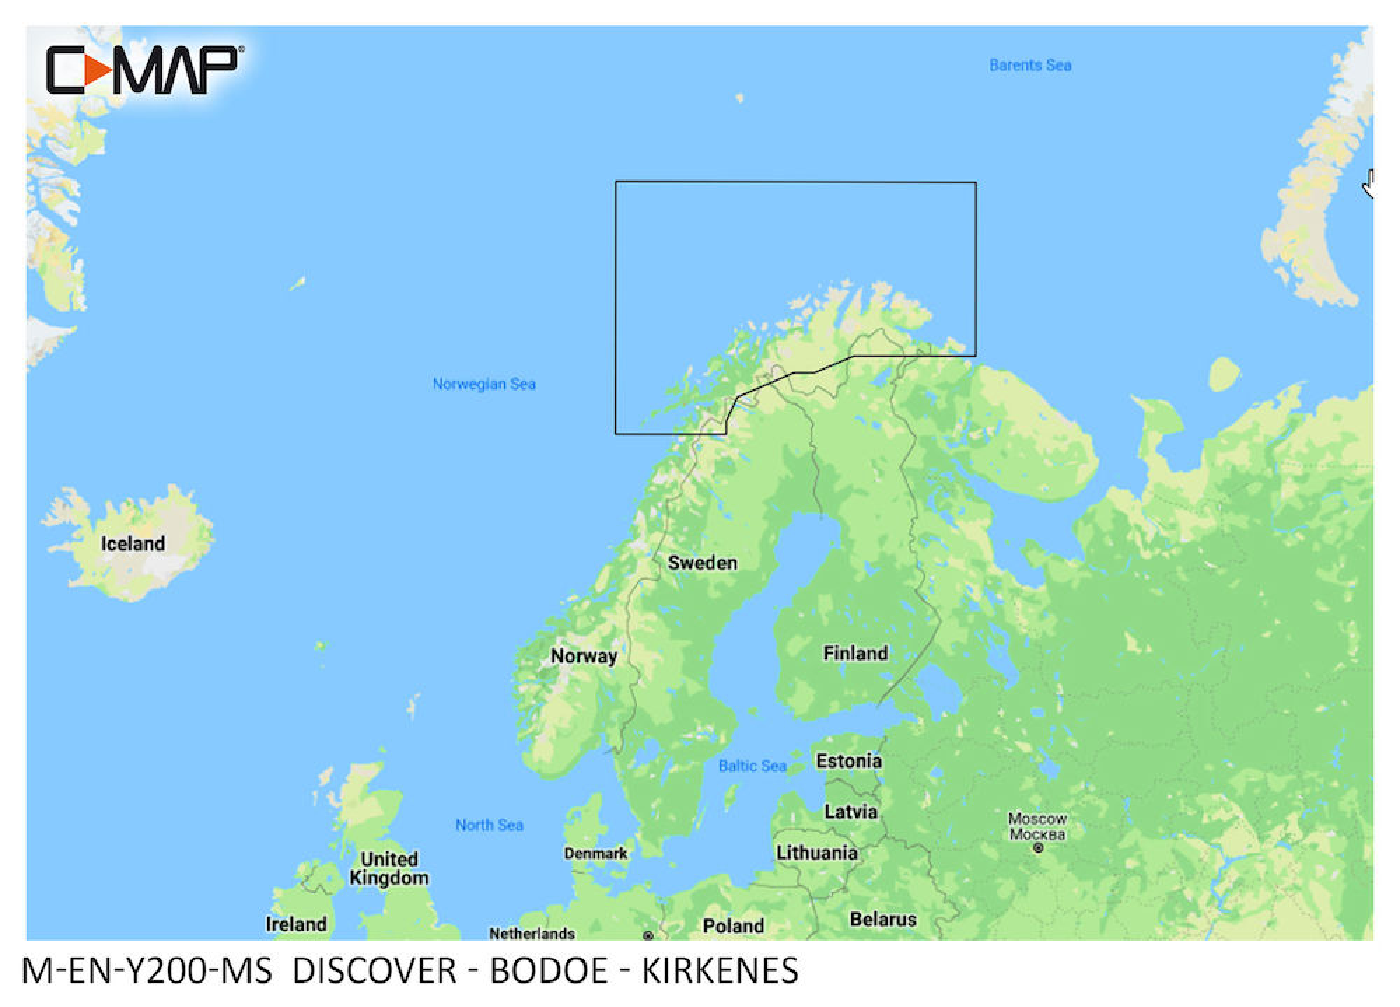 C-MAP Discover Bodoe - Kirkenes M-EN-Y200